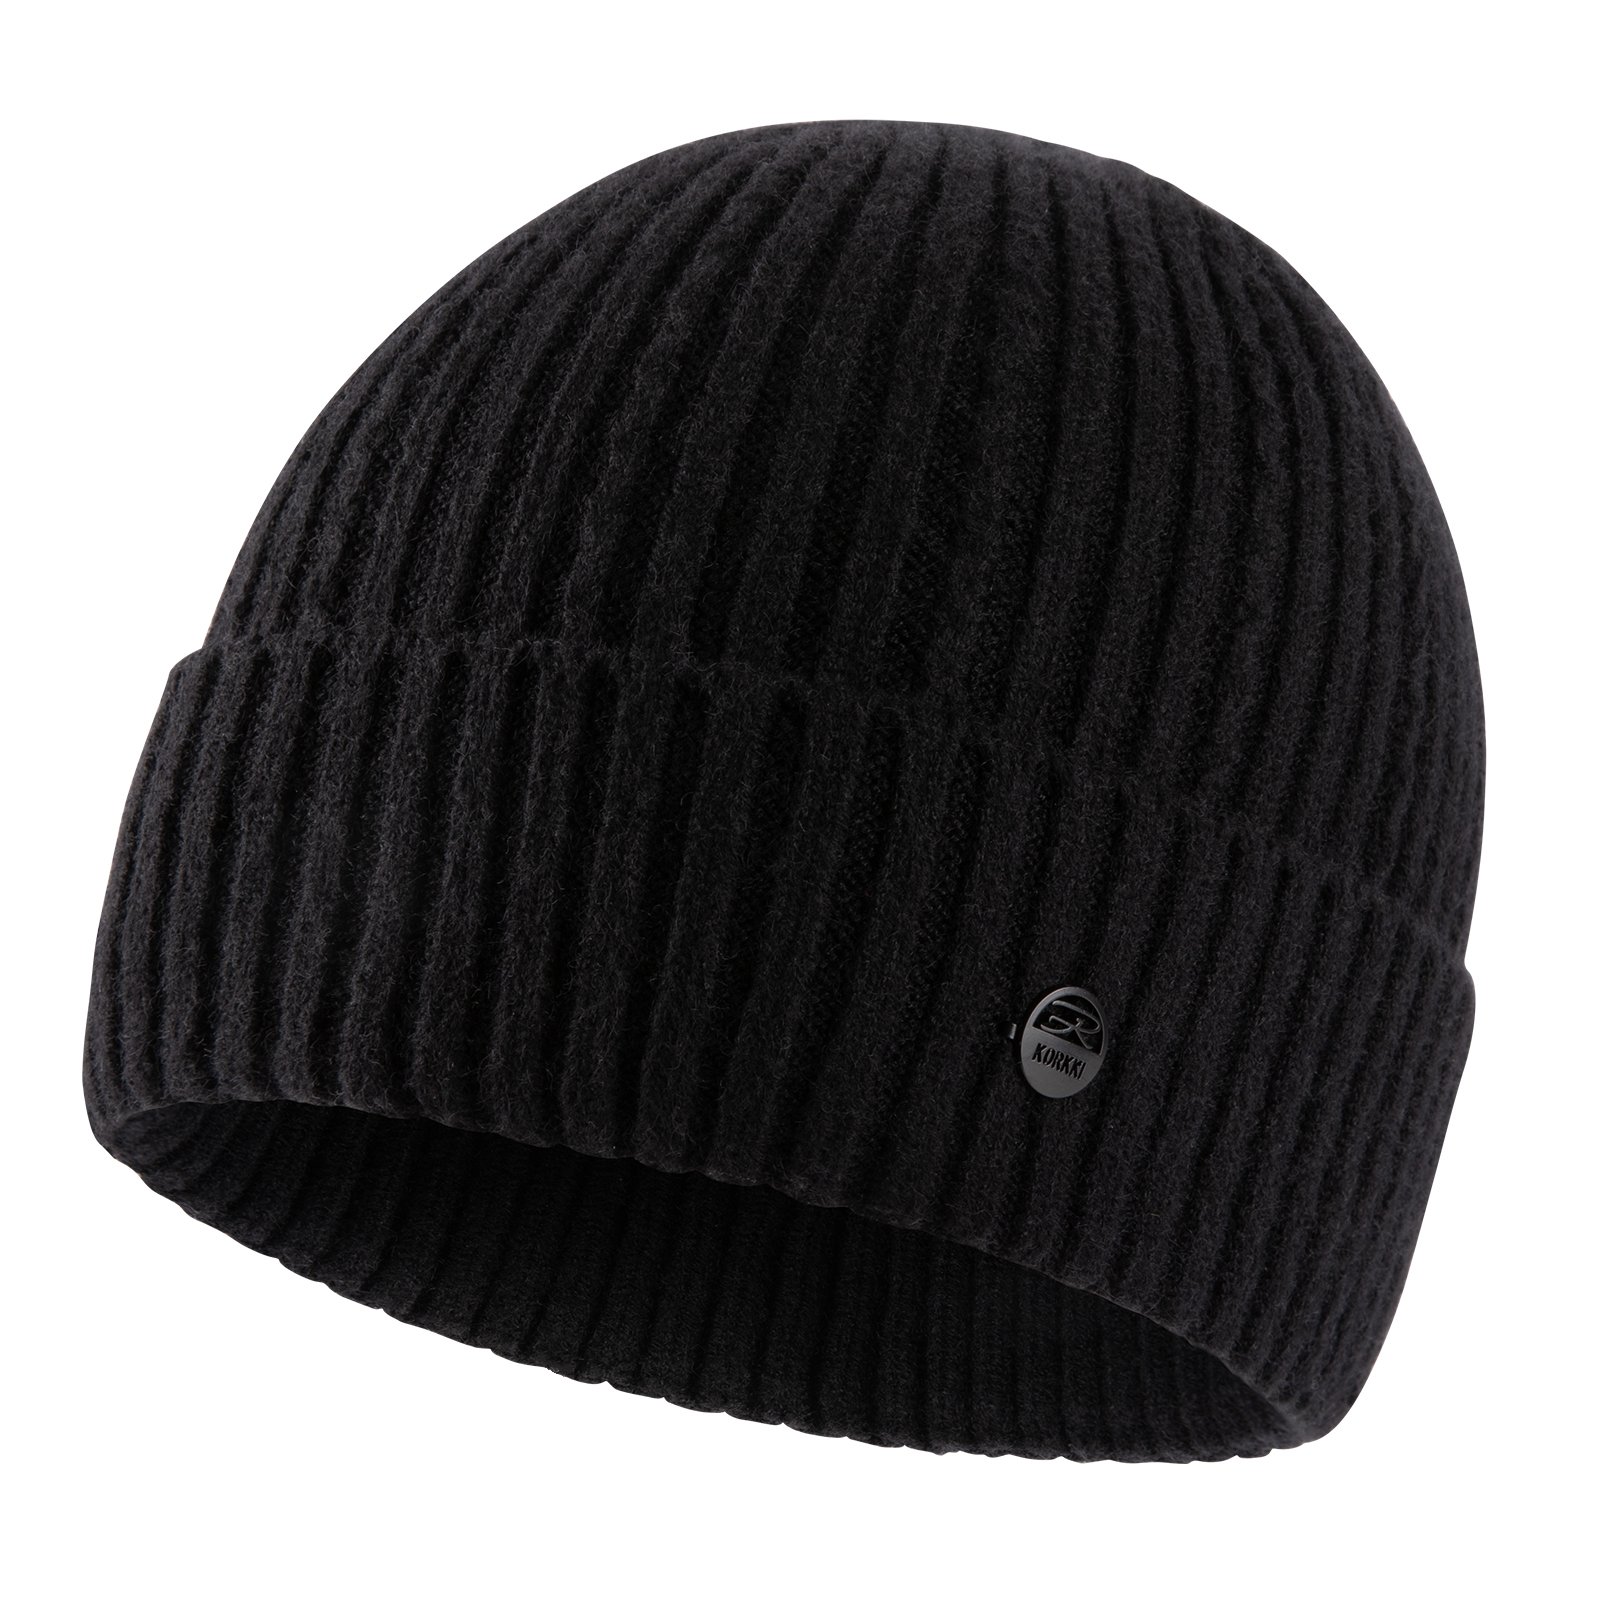 EGNMCR Beanie Slouchy Winter Beanie Knit Hats for Men & Women ...